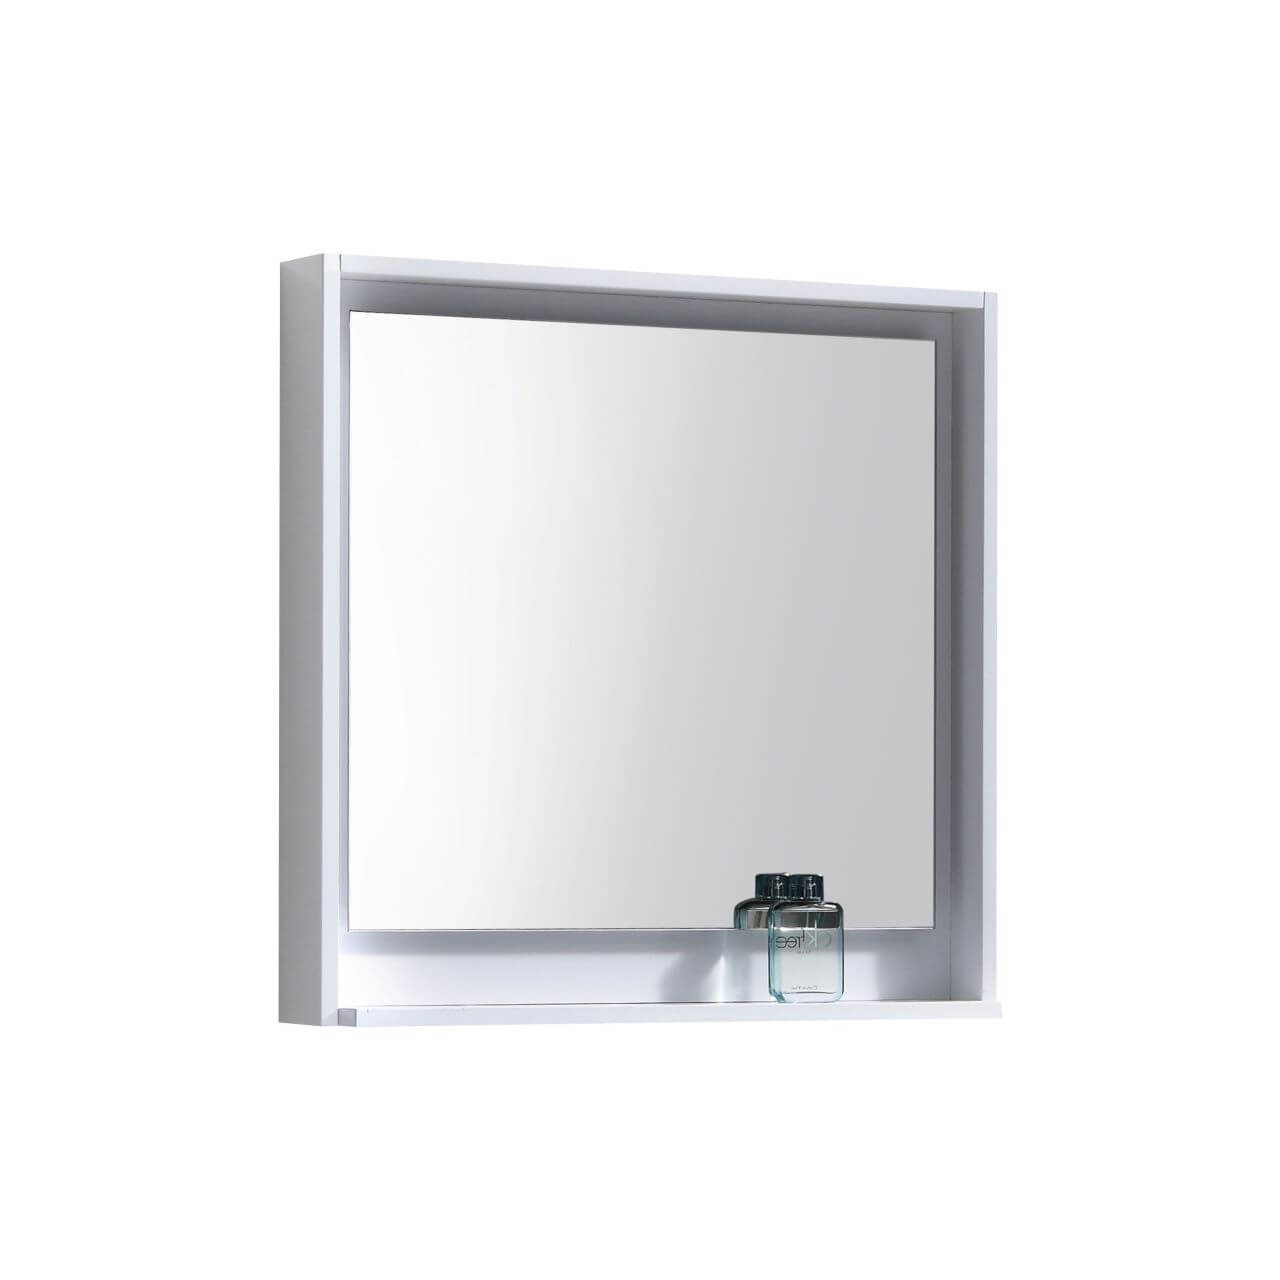 KUBEBATH Bosco KB30GW-M 30" Framed Mirror in High Gloss White, Angled View